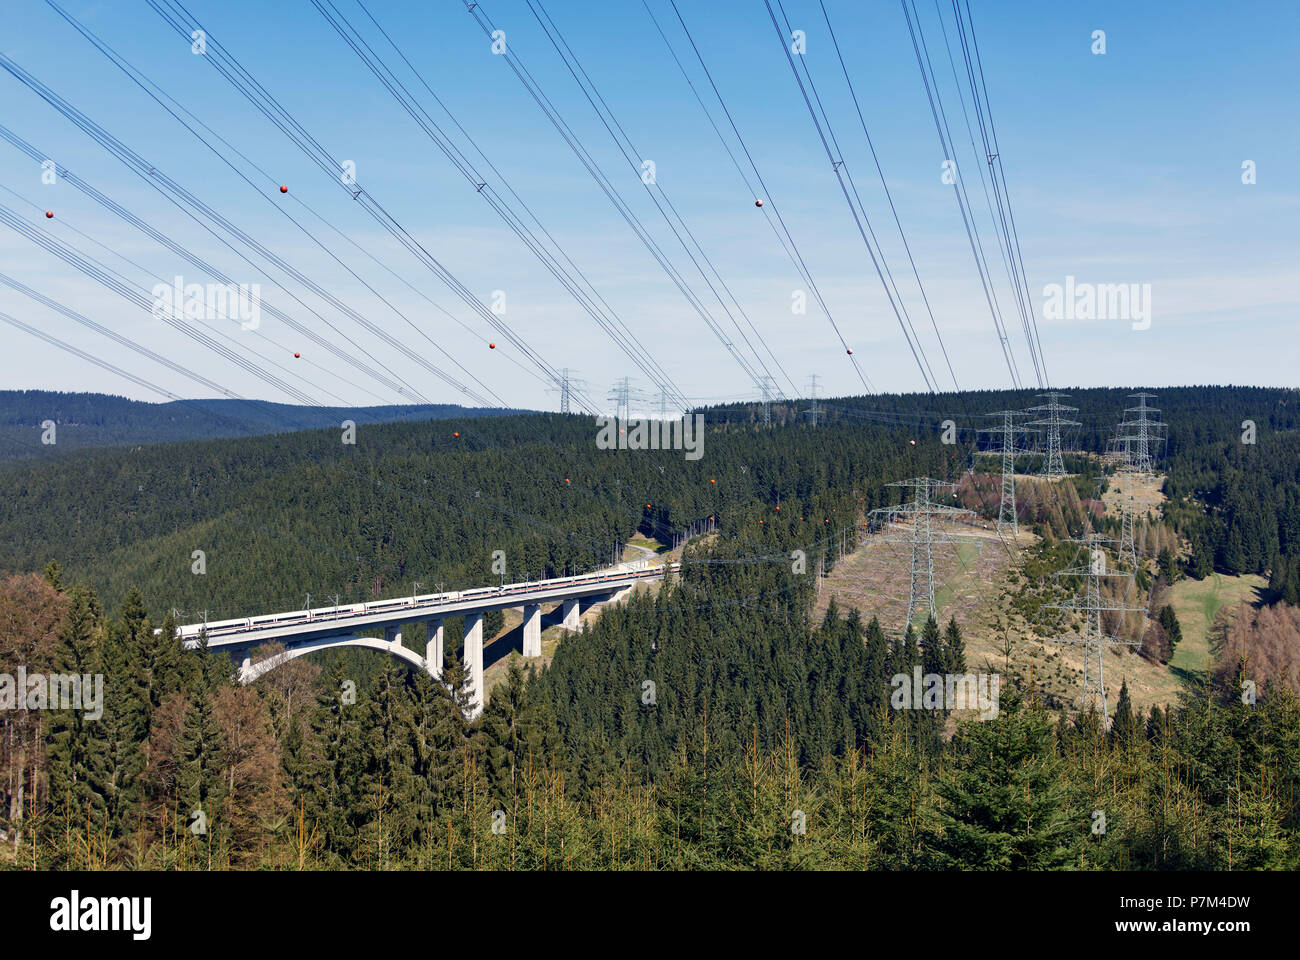 Train, bridge, forest, high voltage power lines Stock Photo